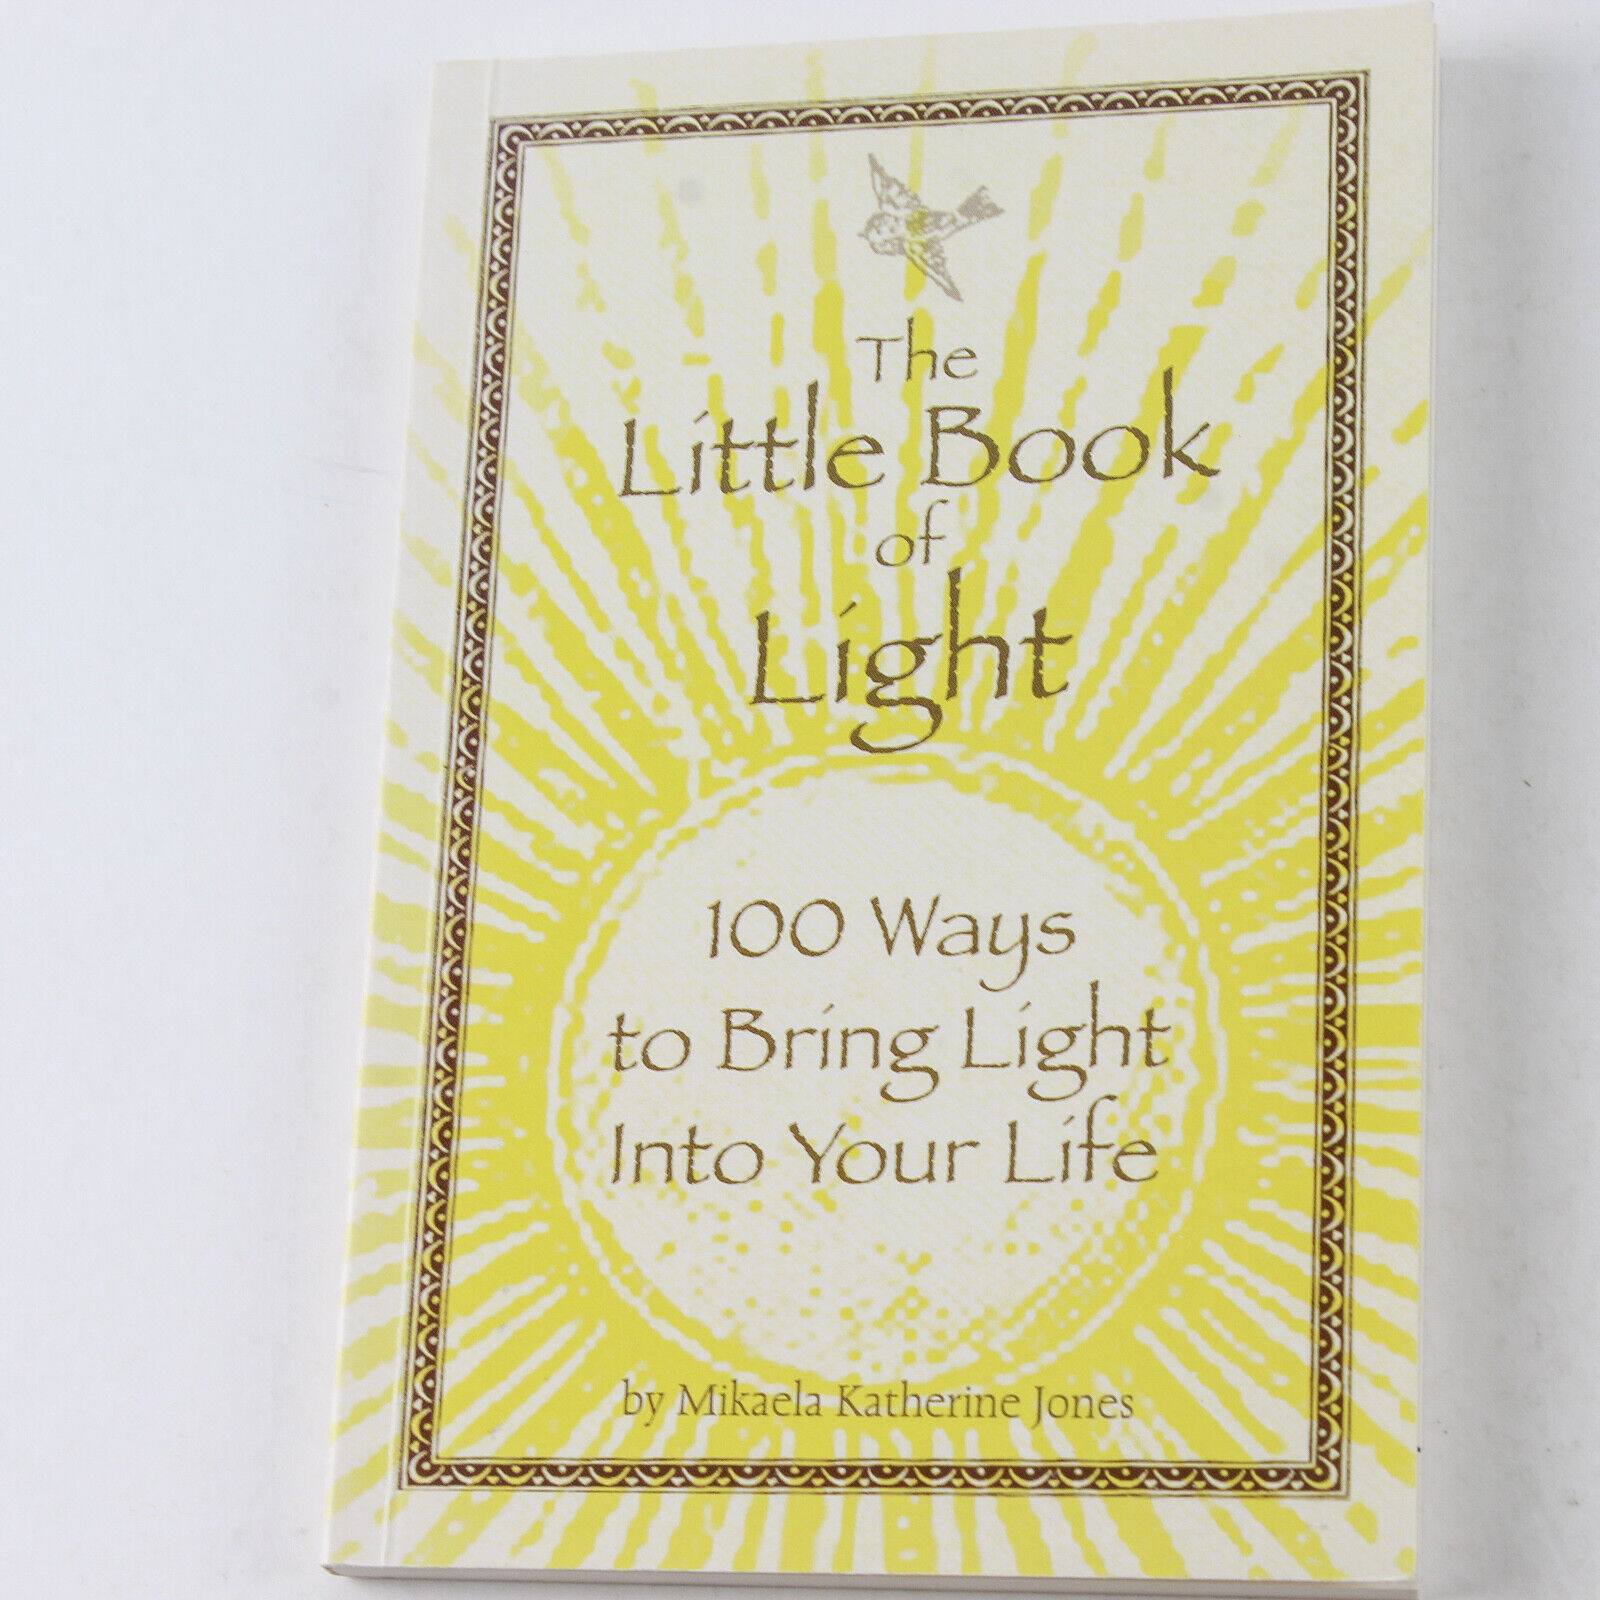 The Little Book of Light Mikaela Katherine Jones 2006 Radiant Being PB Signed